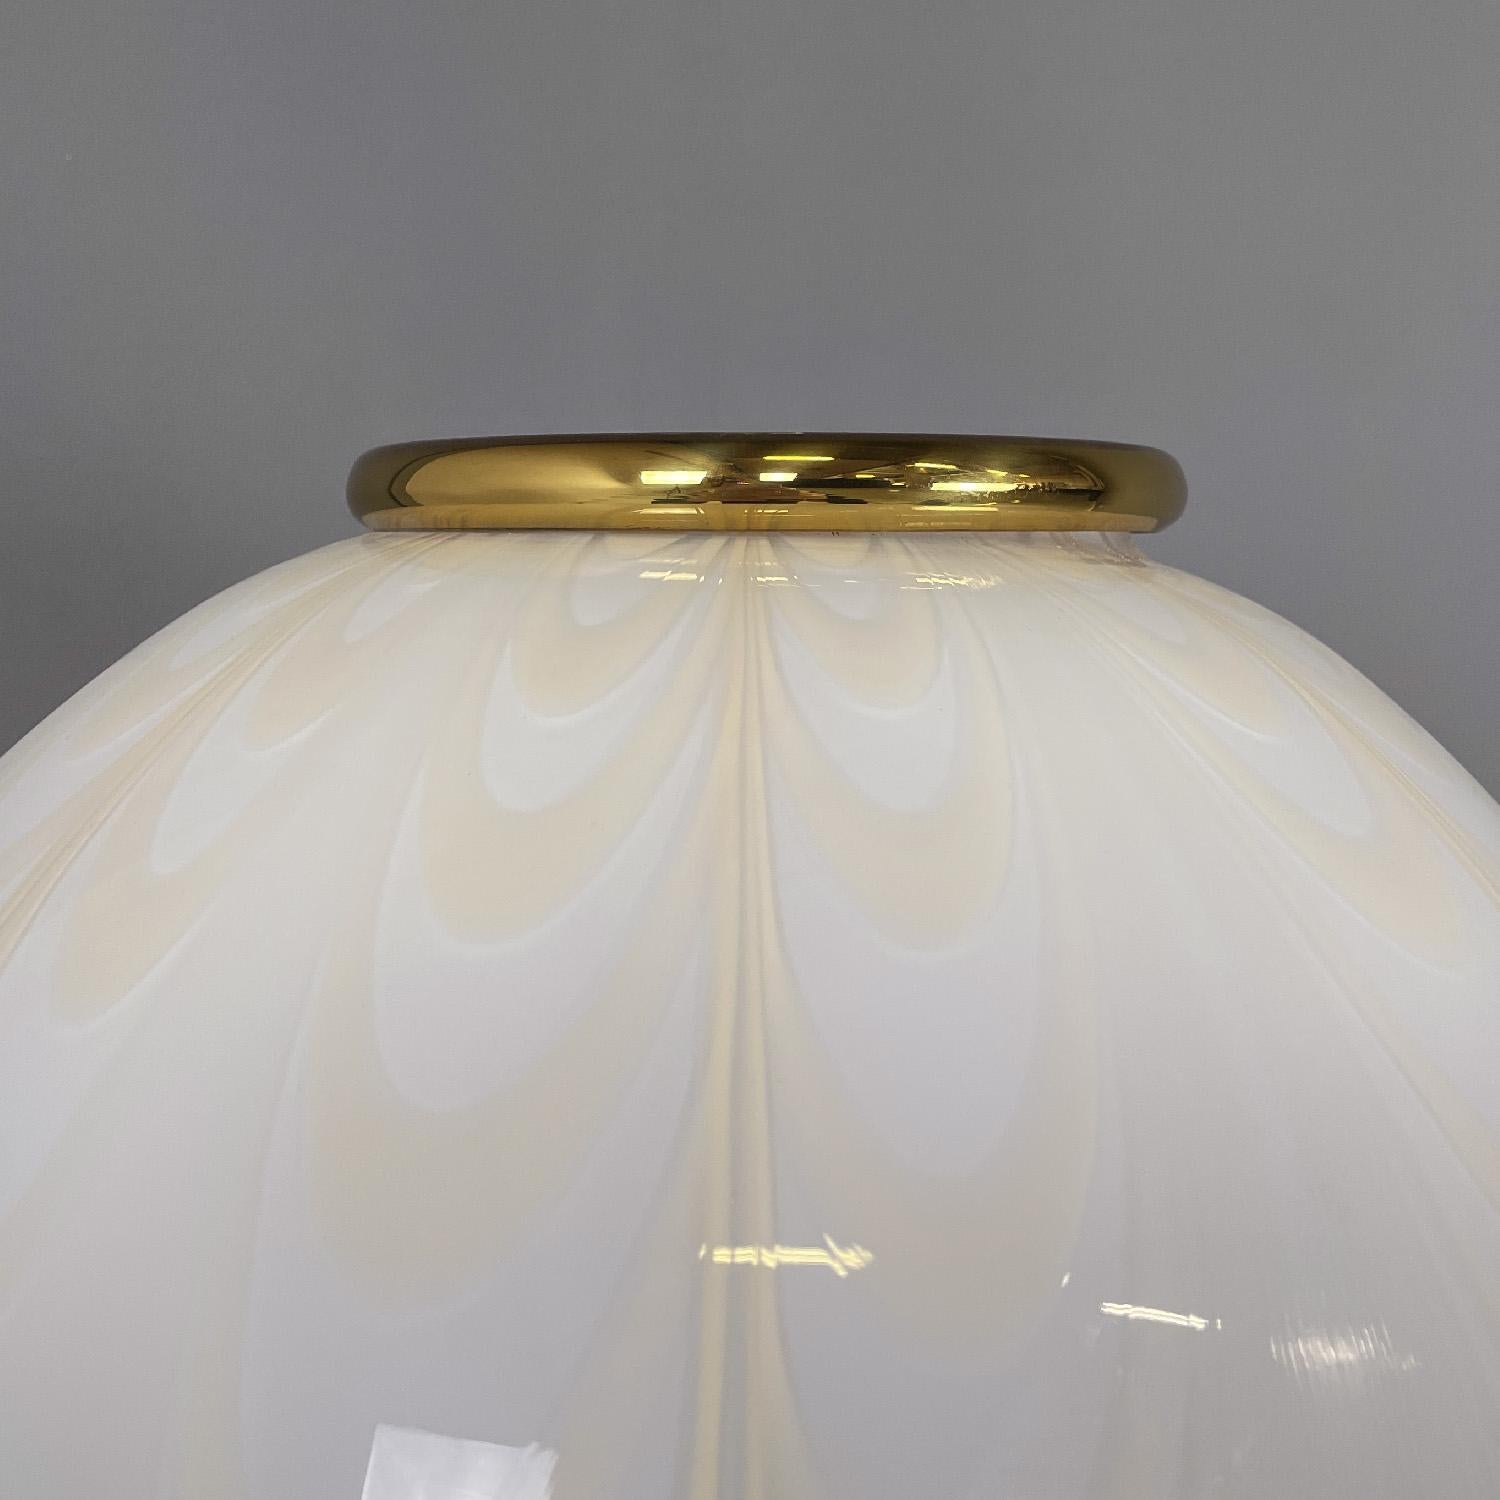 Italian modern table lamp in Murano glass by Fabbian Illuminazione, 1980s For Sale 2